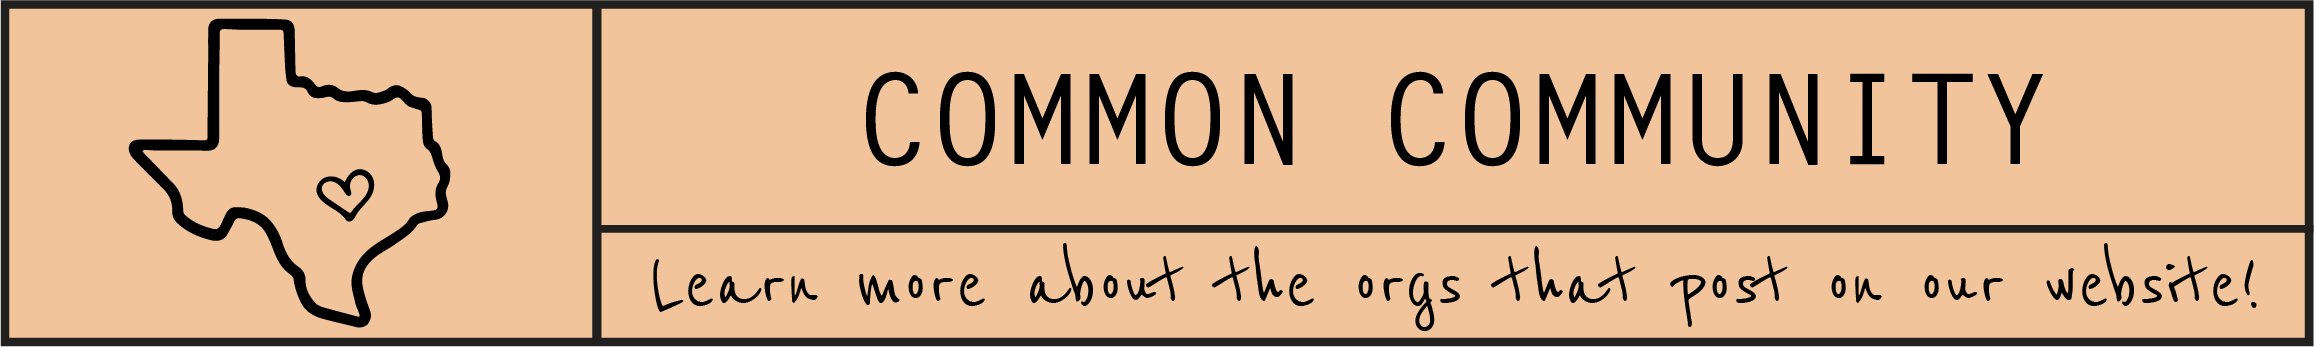 Common Community - Header